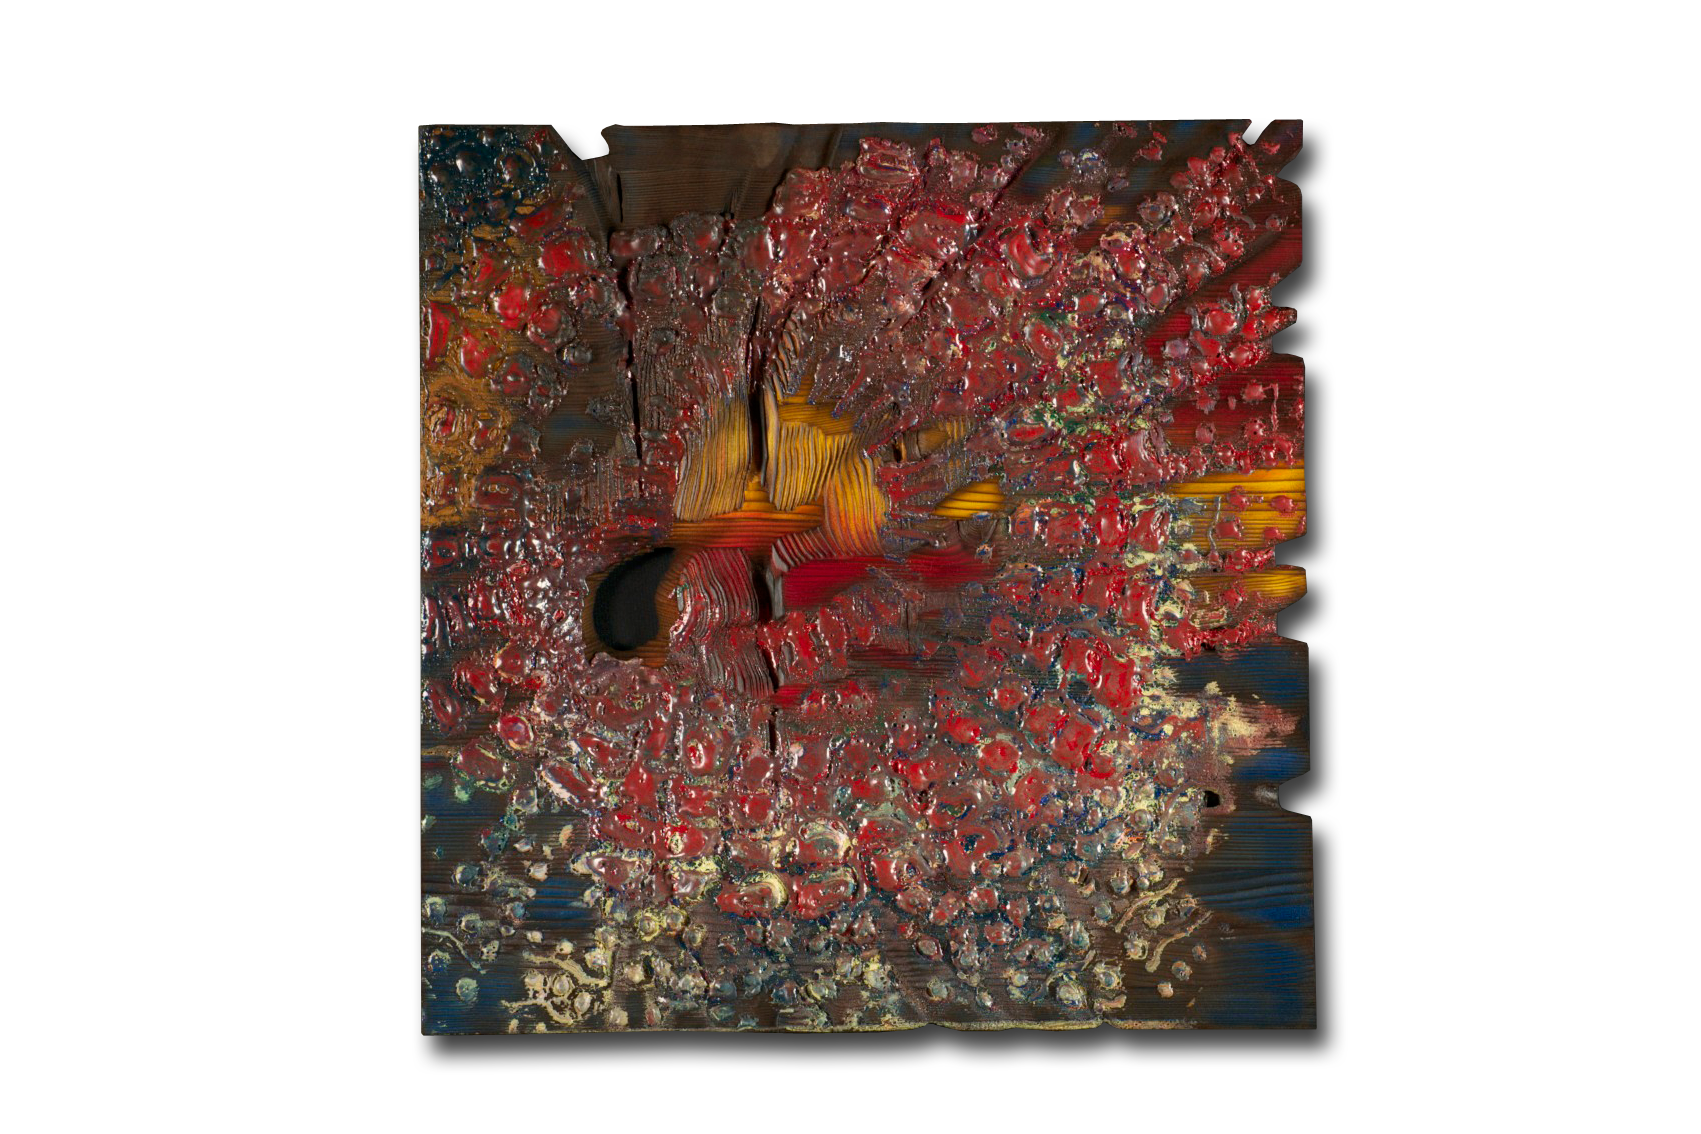 Thomas Girbl "burningdiscovery-4163" 50x50cm 2013